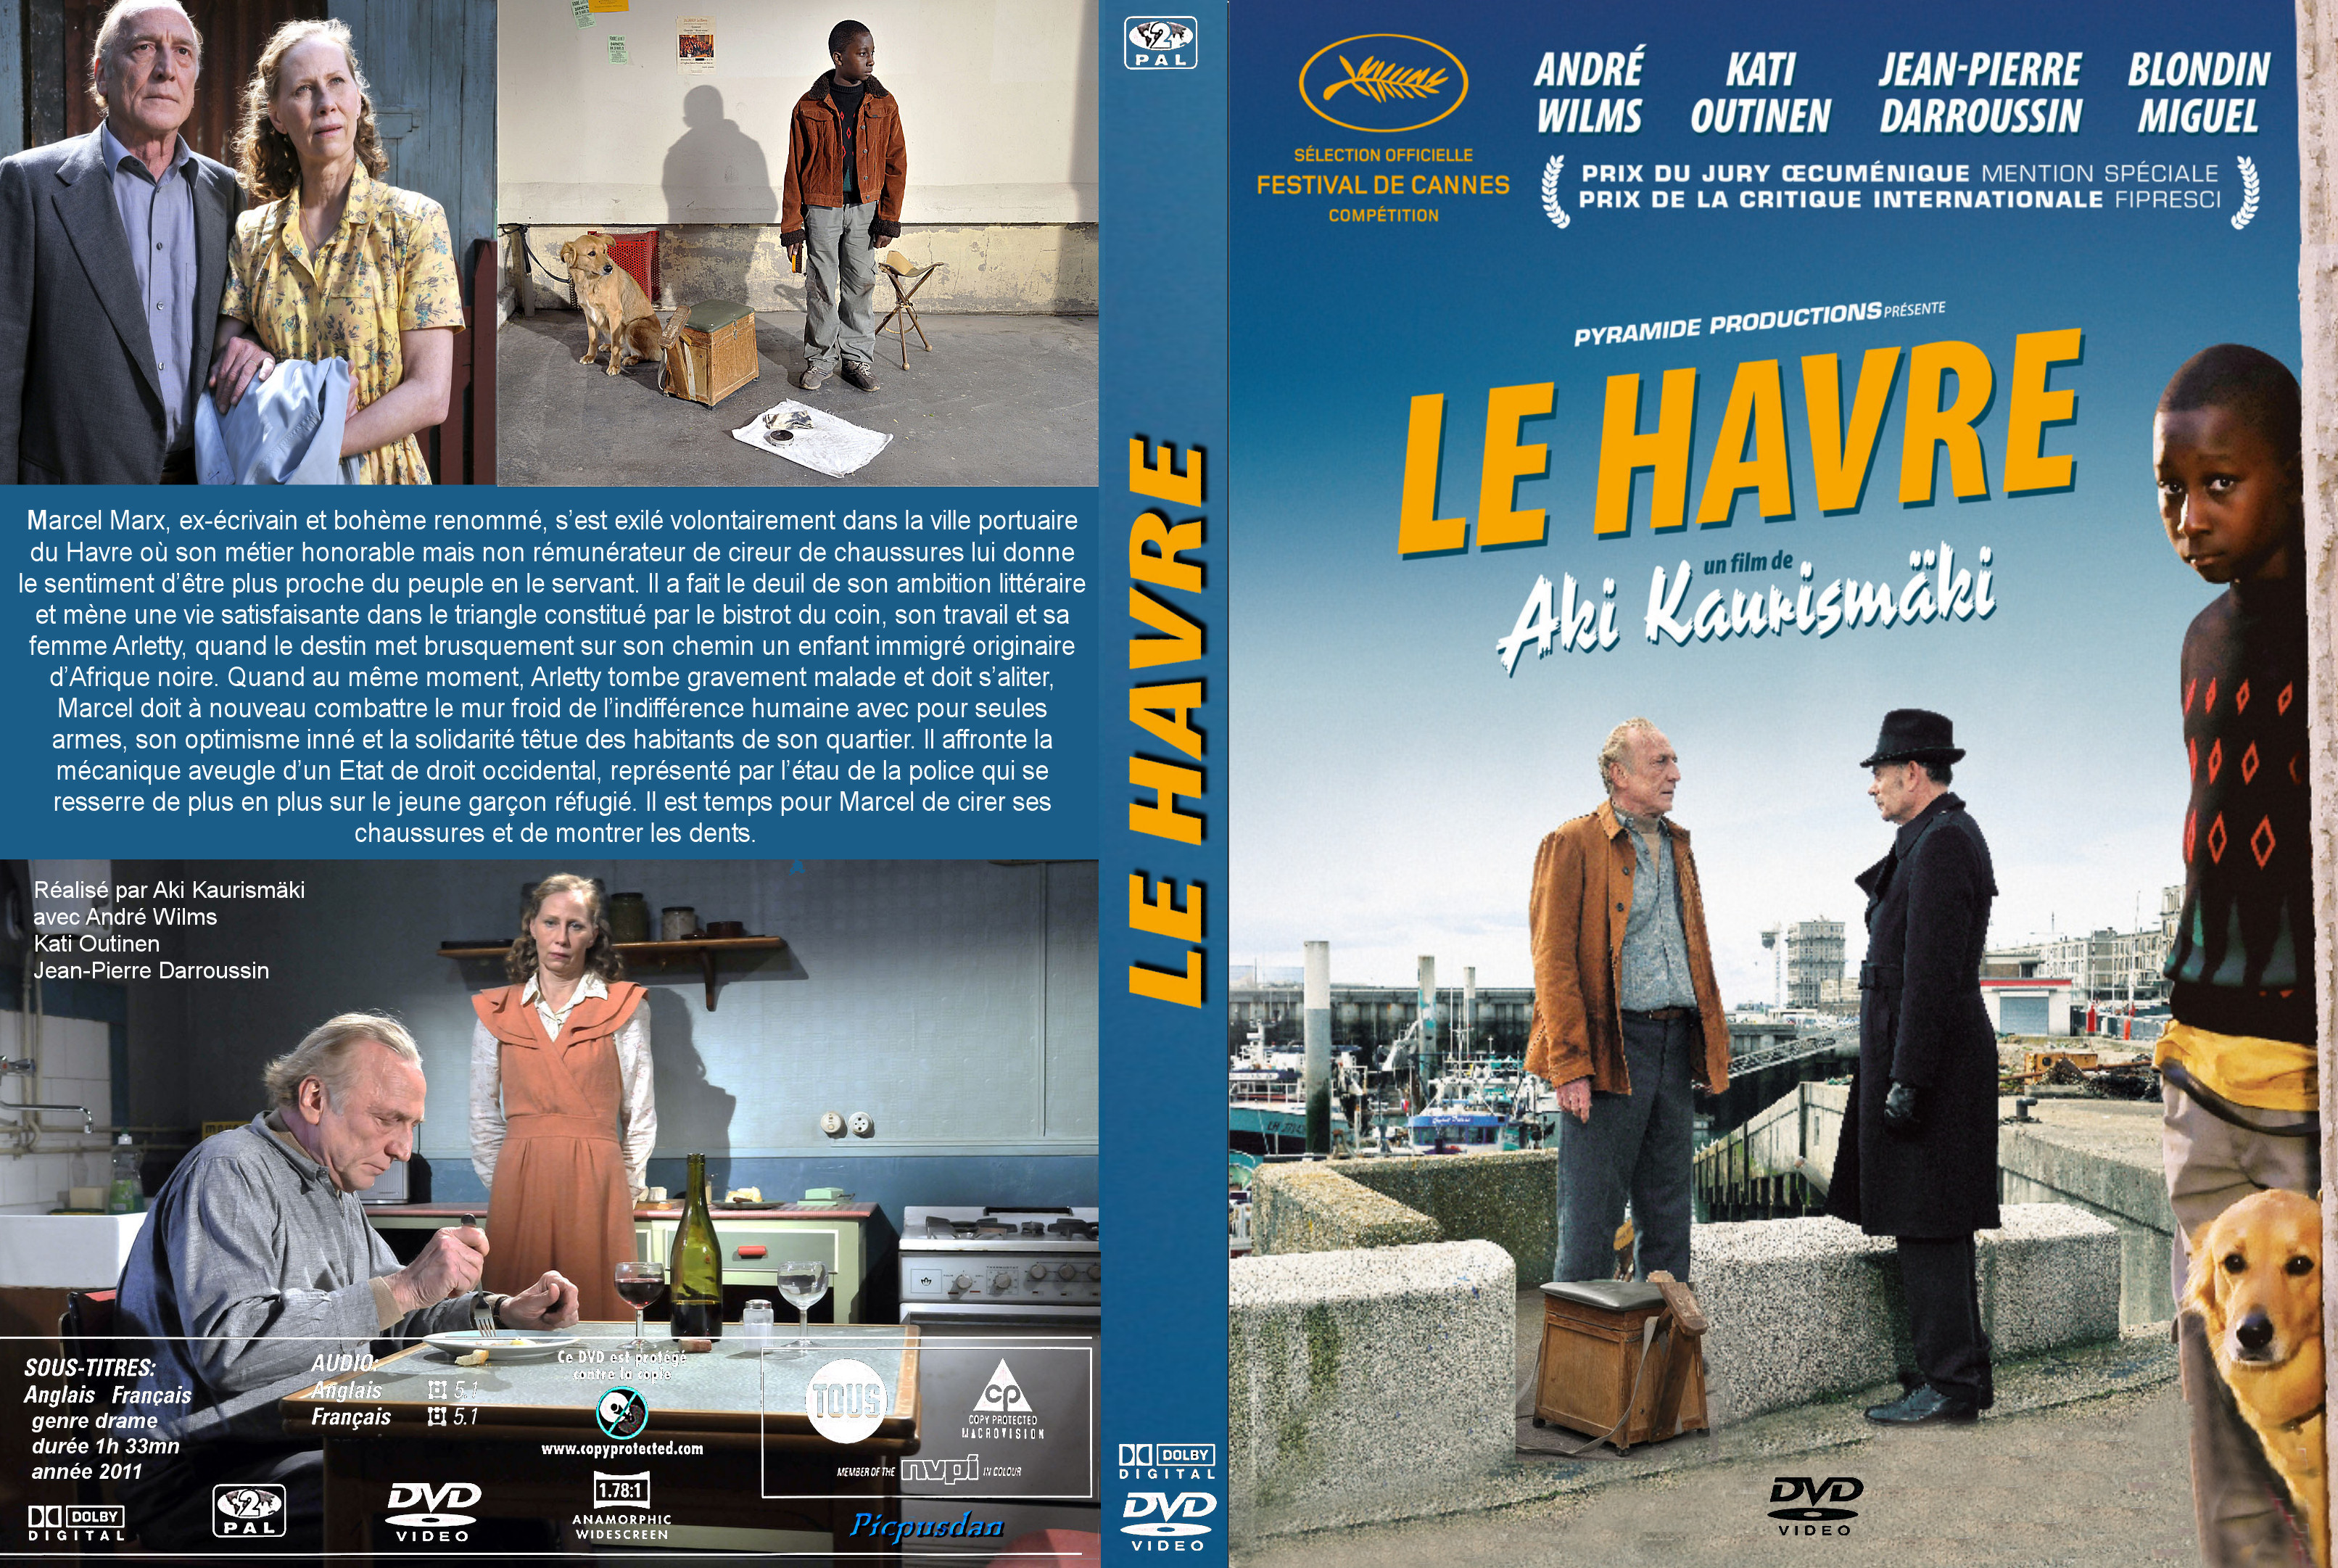 Jaquette DVD Le Havre custom